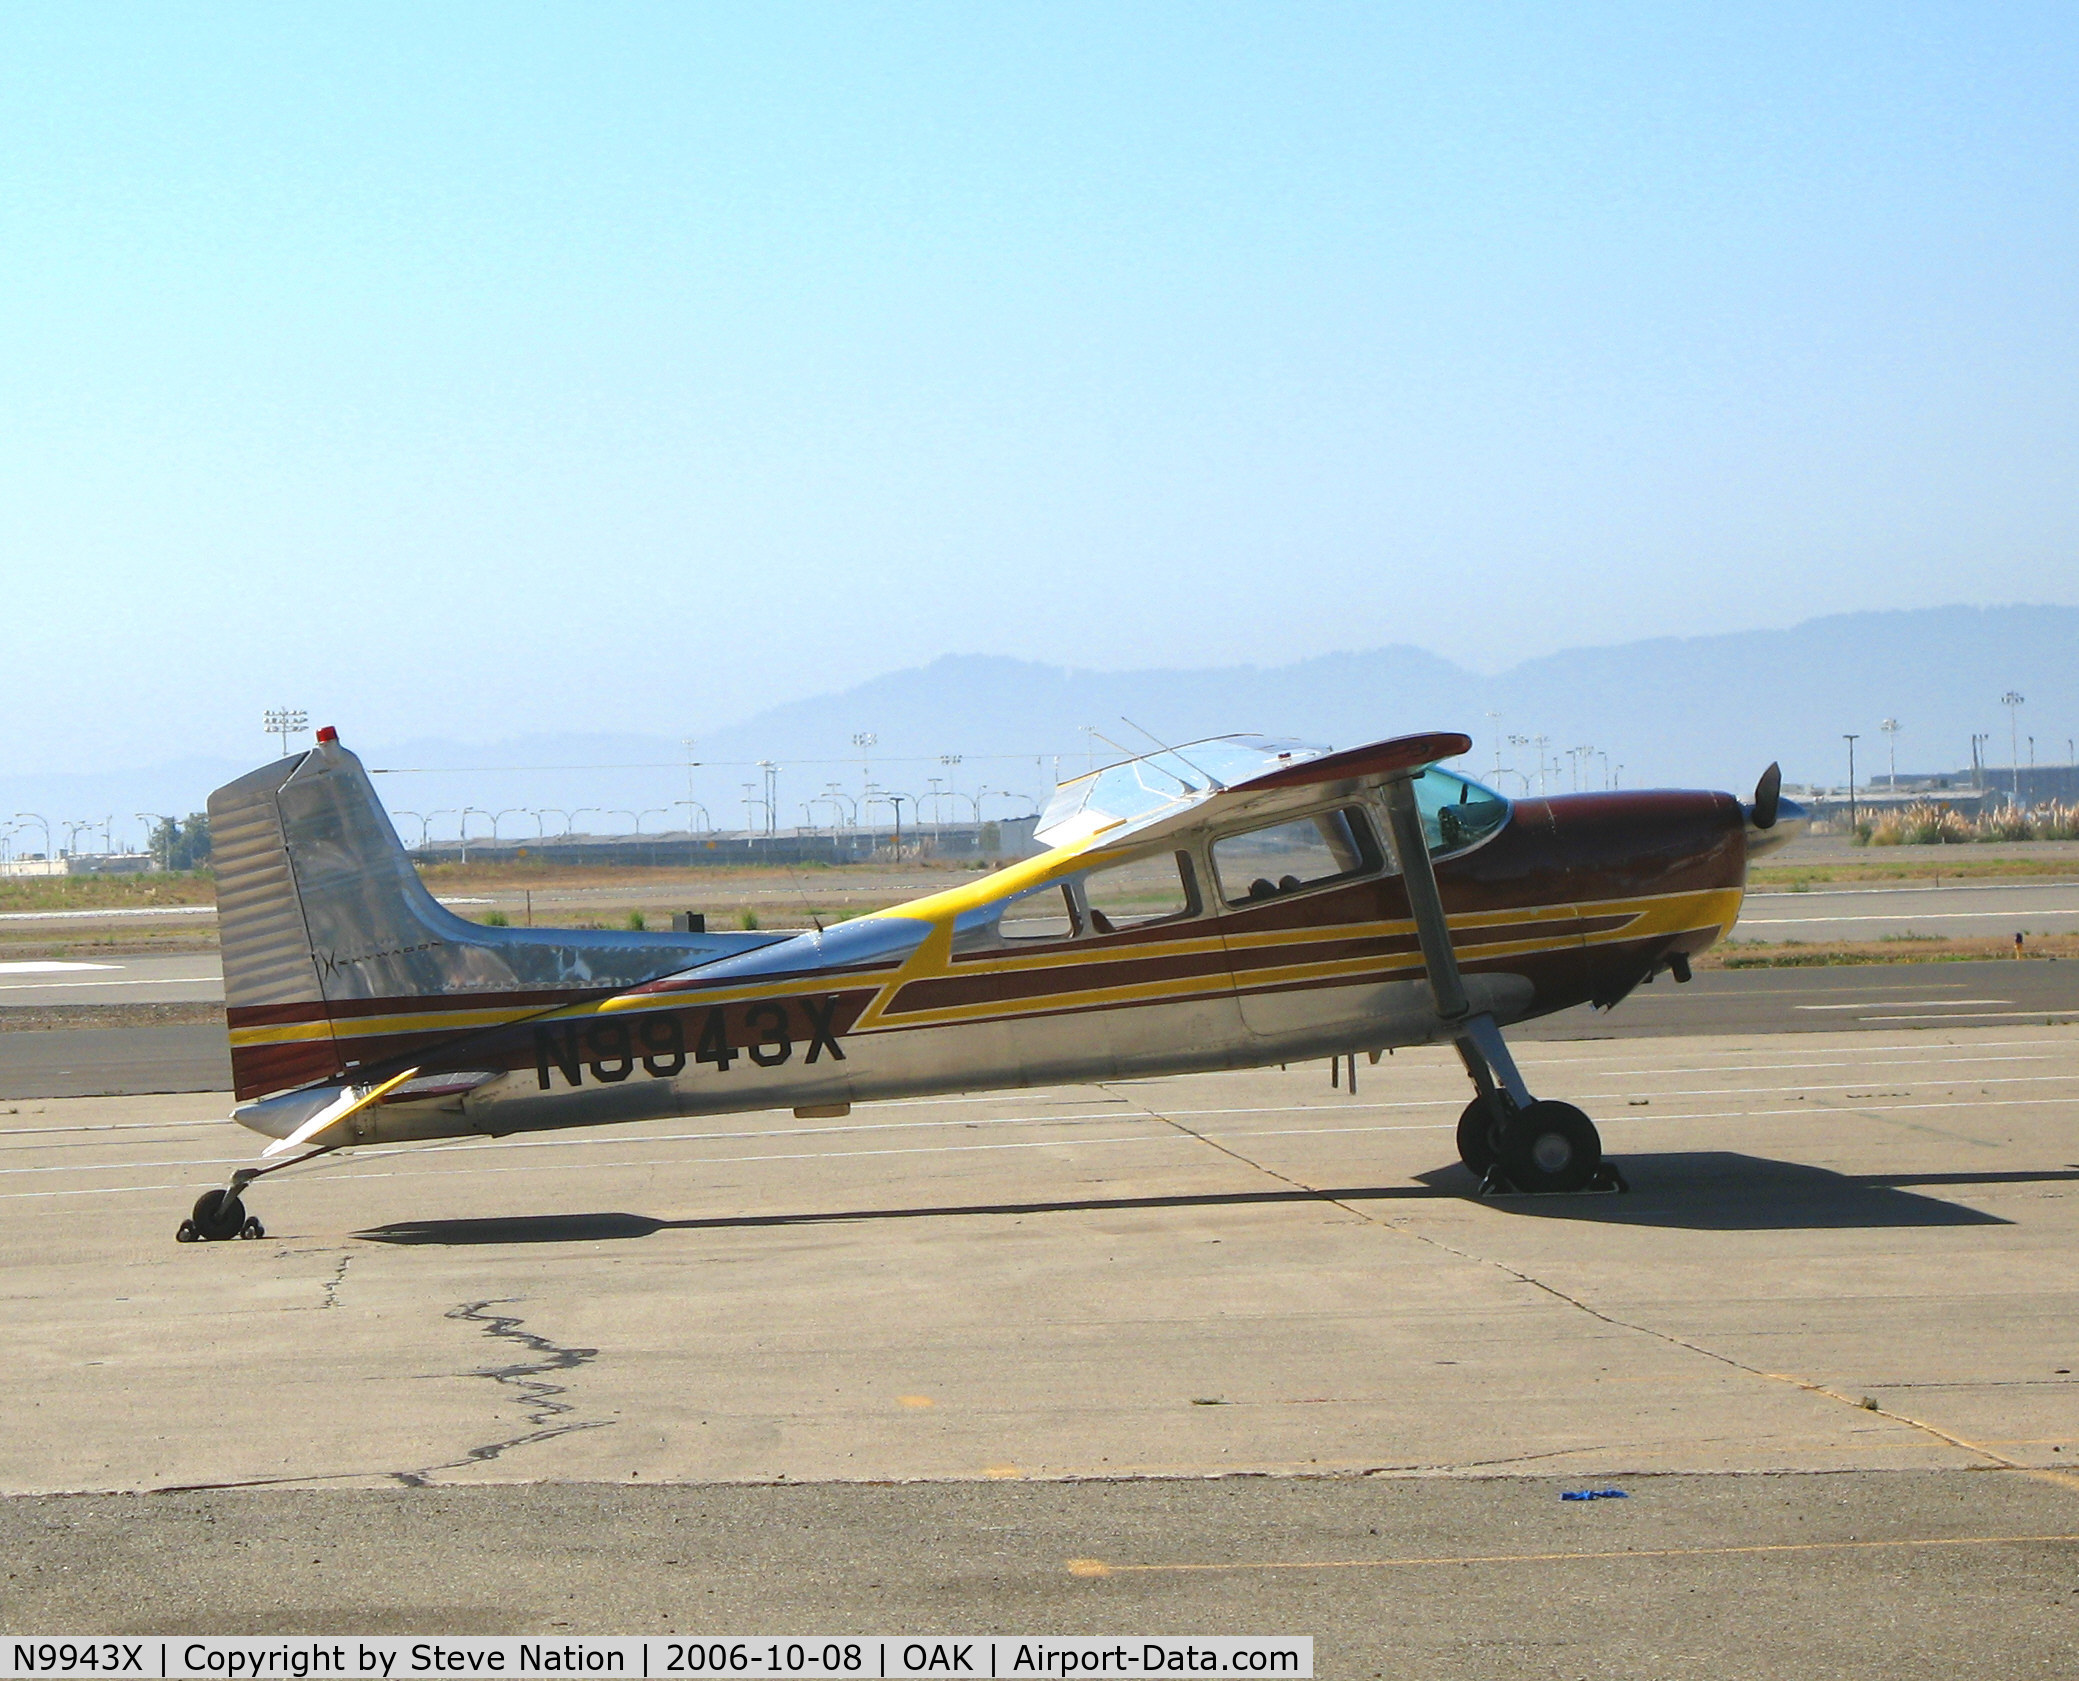 N9943X, 1961 Cessna 185 Skywagon C/N 185-0143, 1961 Cessna 185 visiting from Truckee, CA @ Oakland International Airport, CA